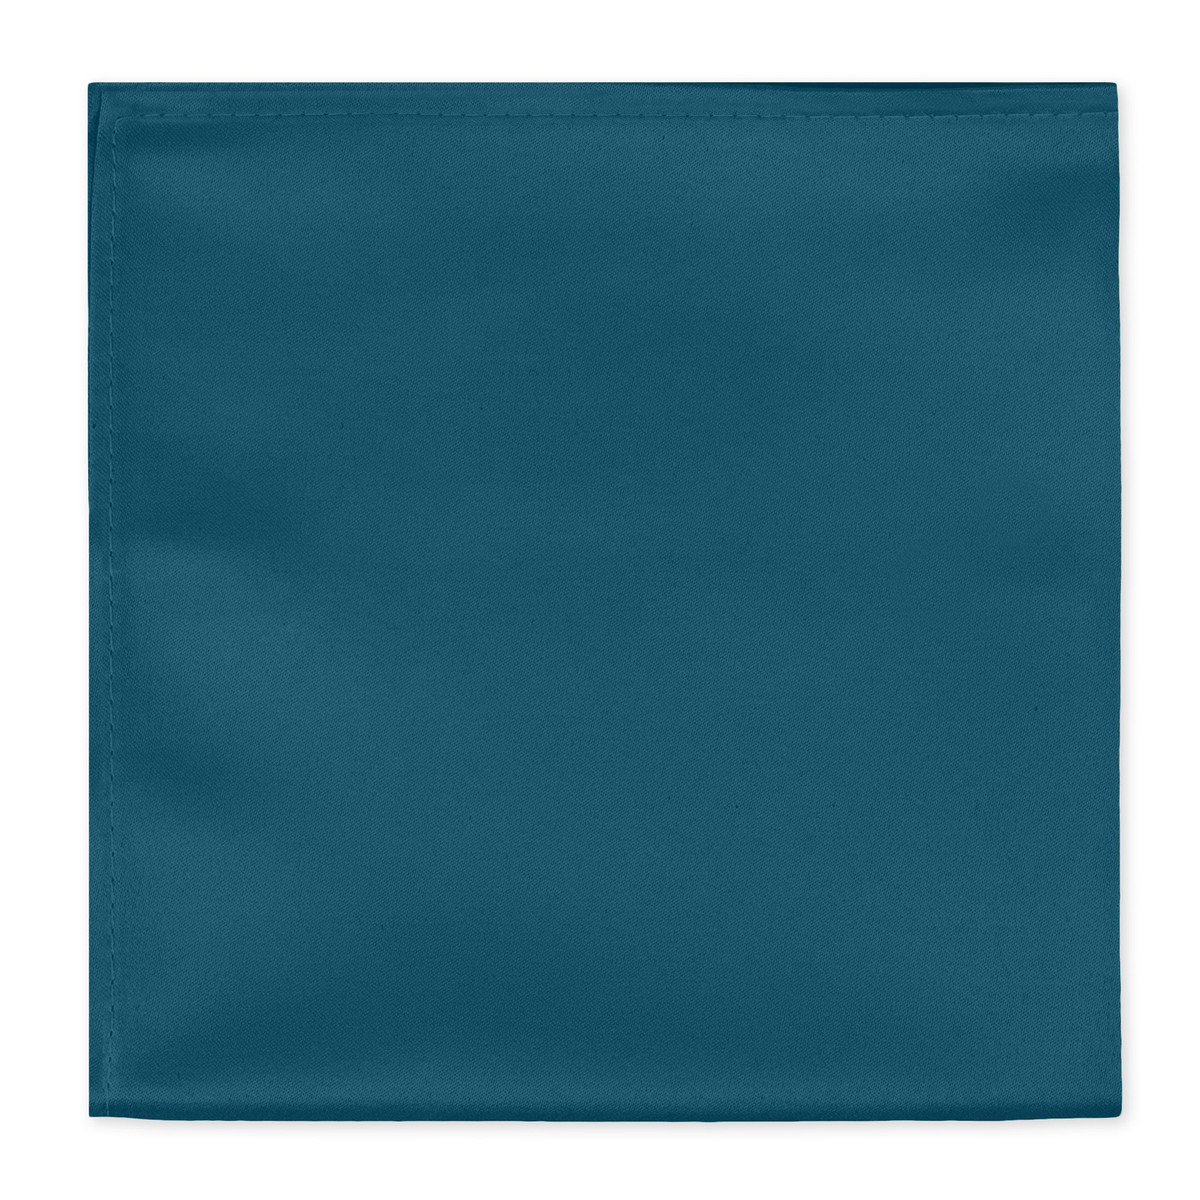 Men's Pocket Square Solid Color Handkerchief - Pacific Blue